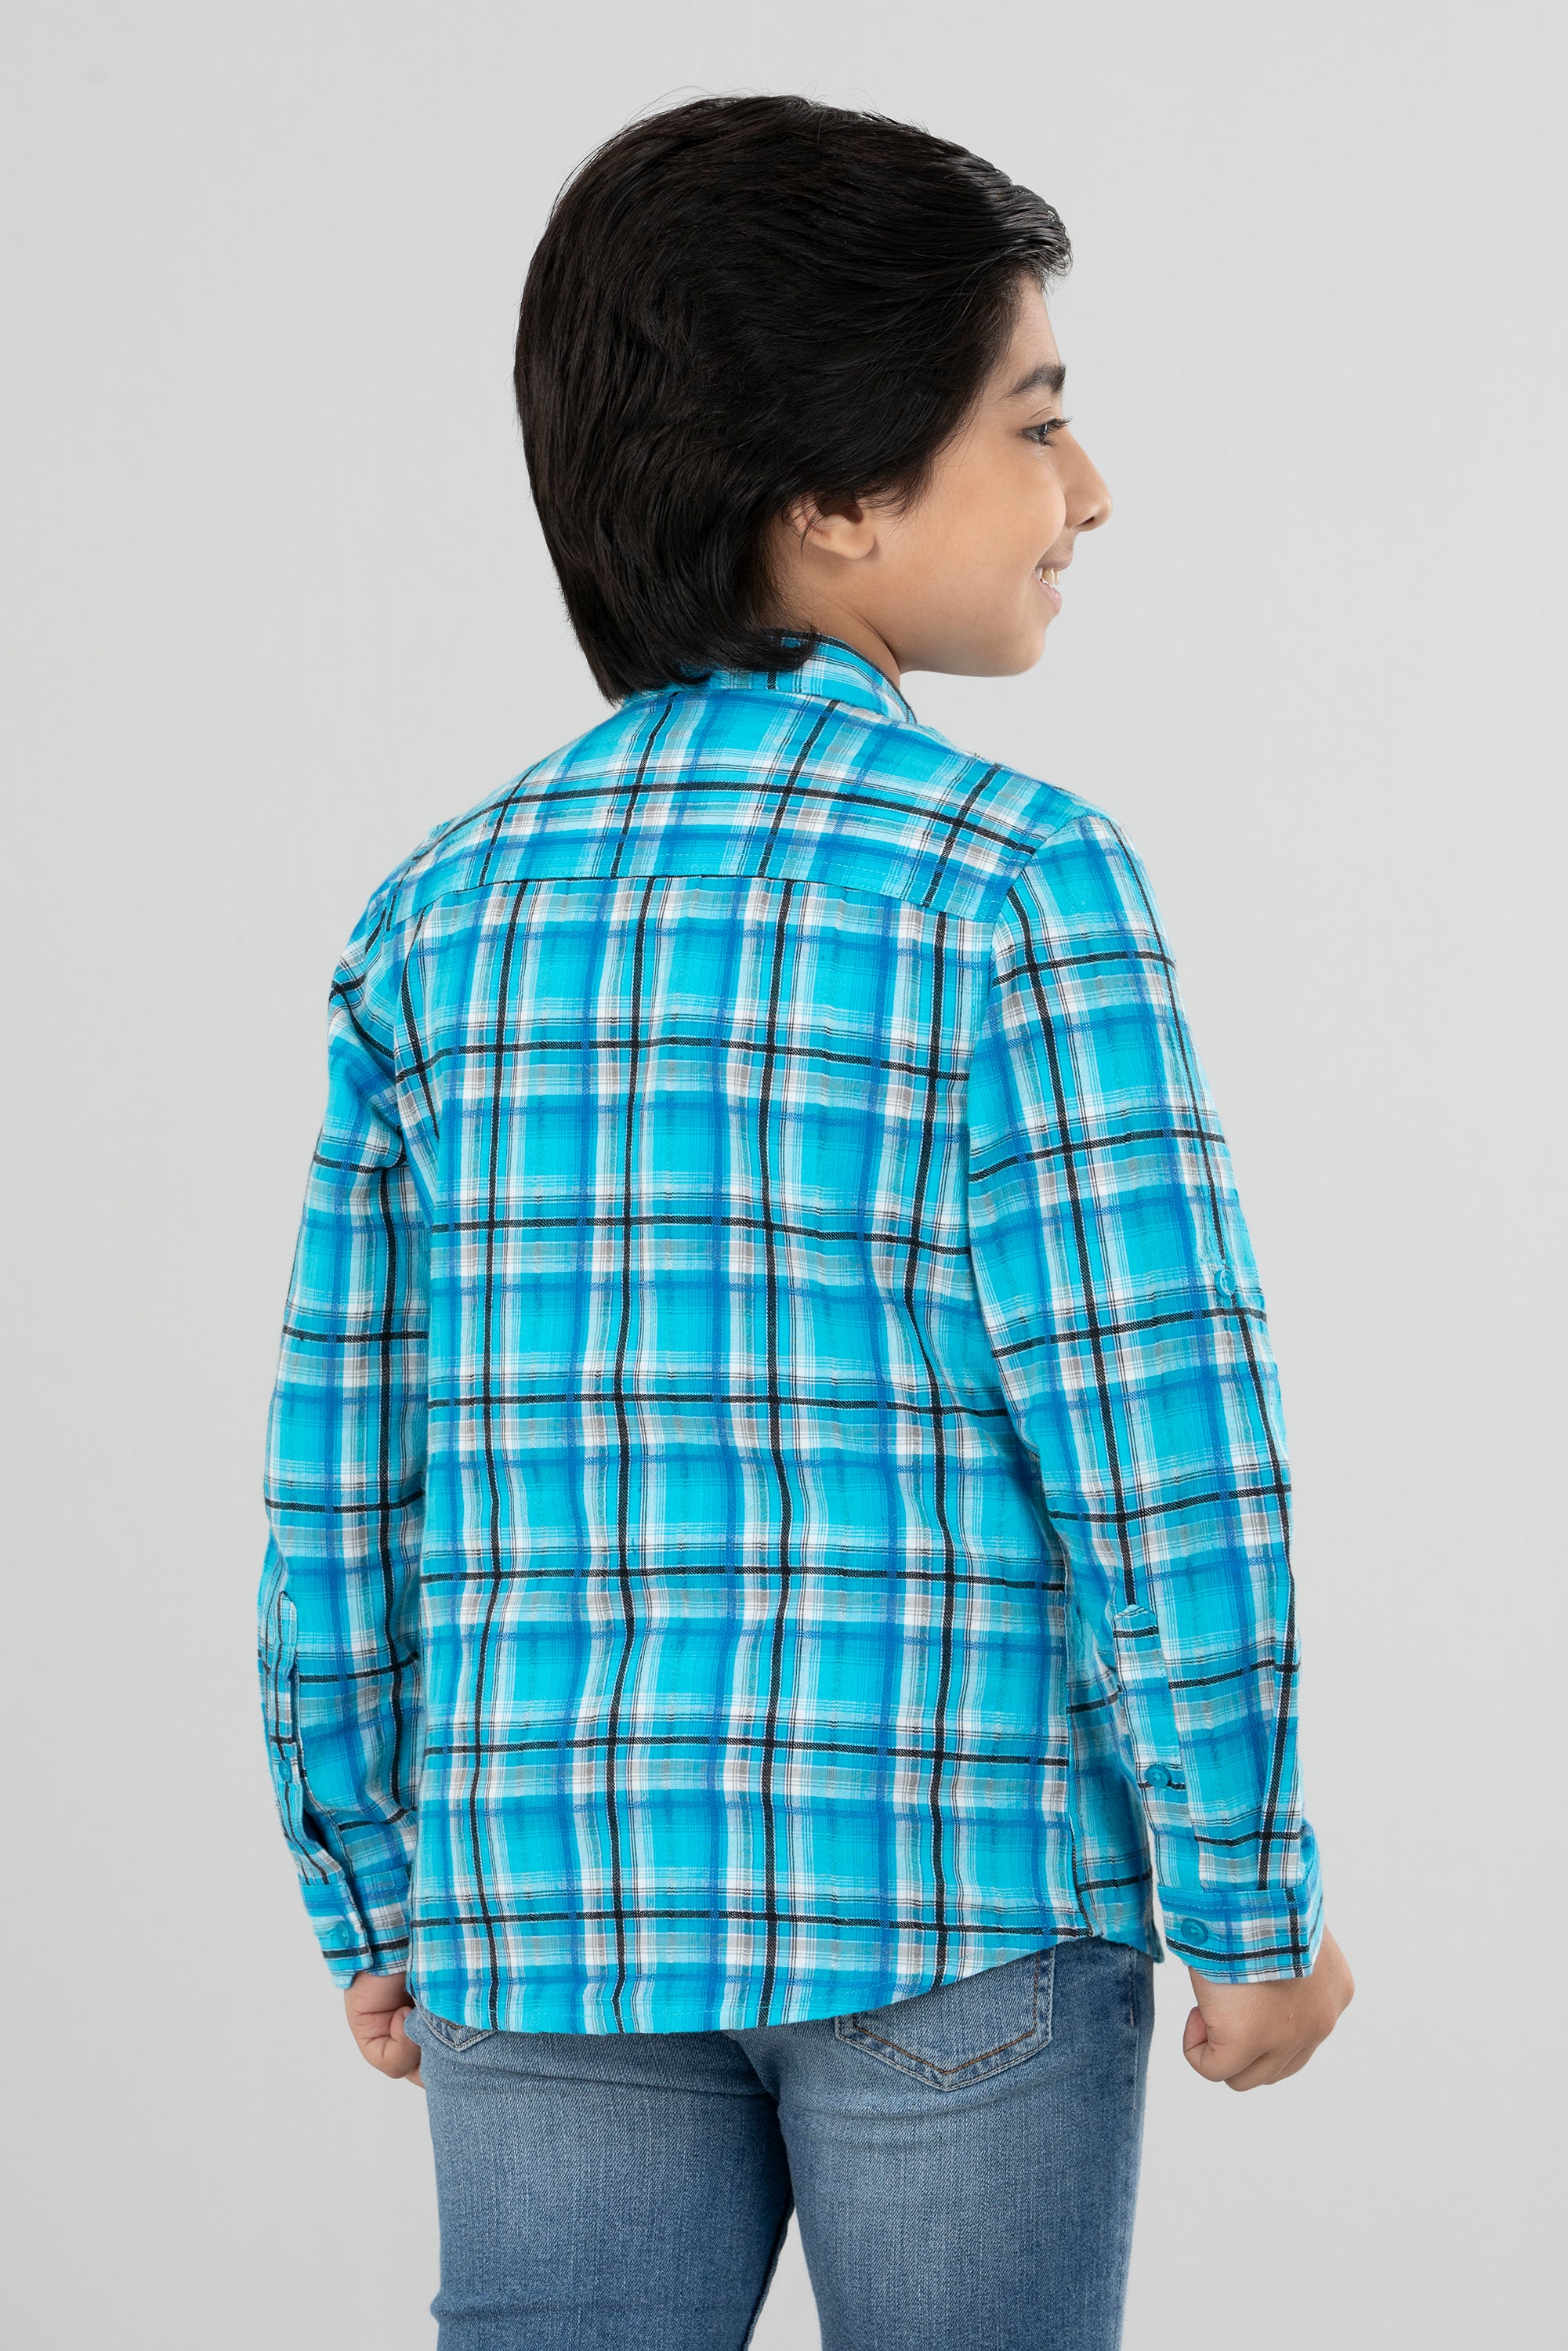 Boys Casual Shirt (6-8 Years)